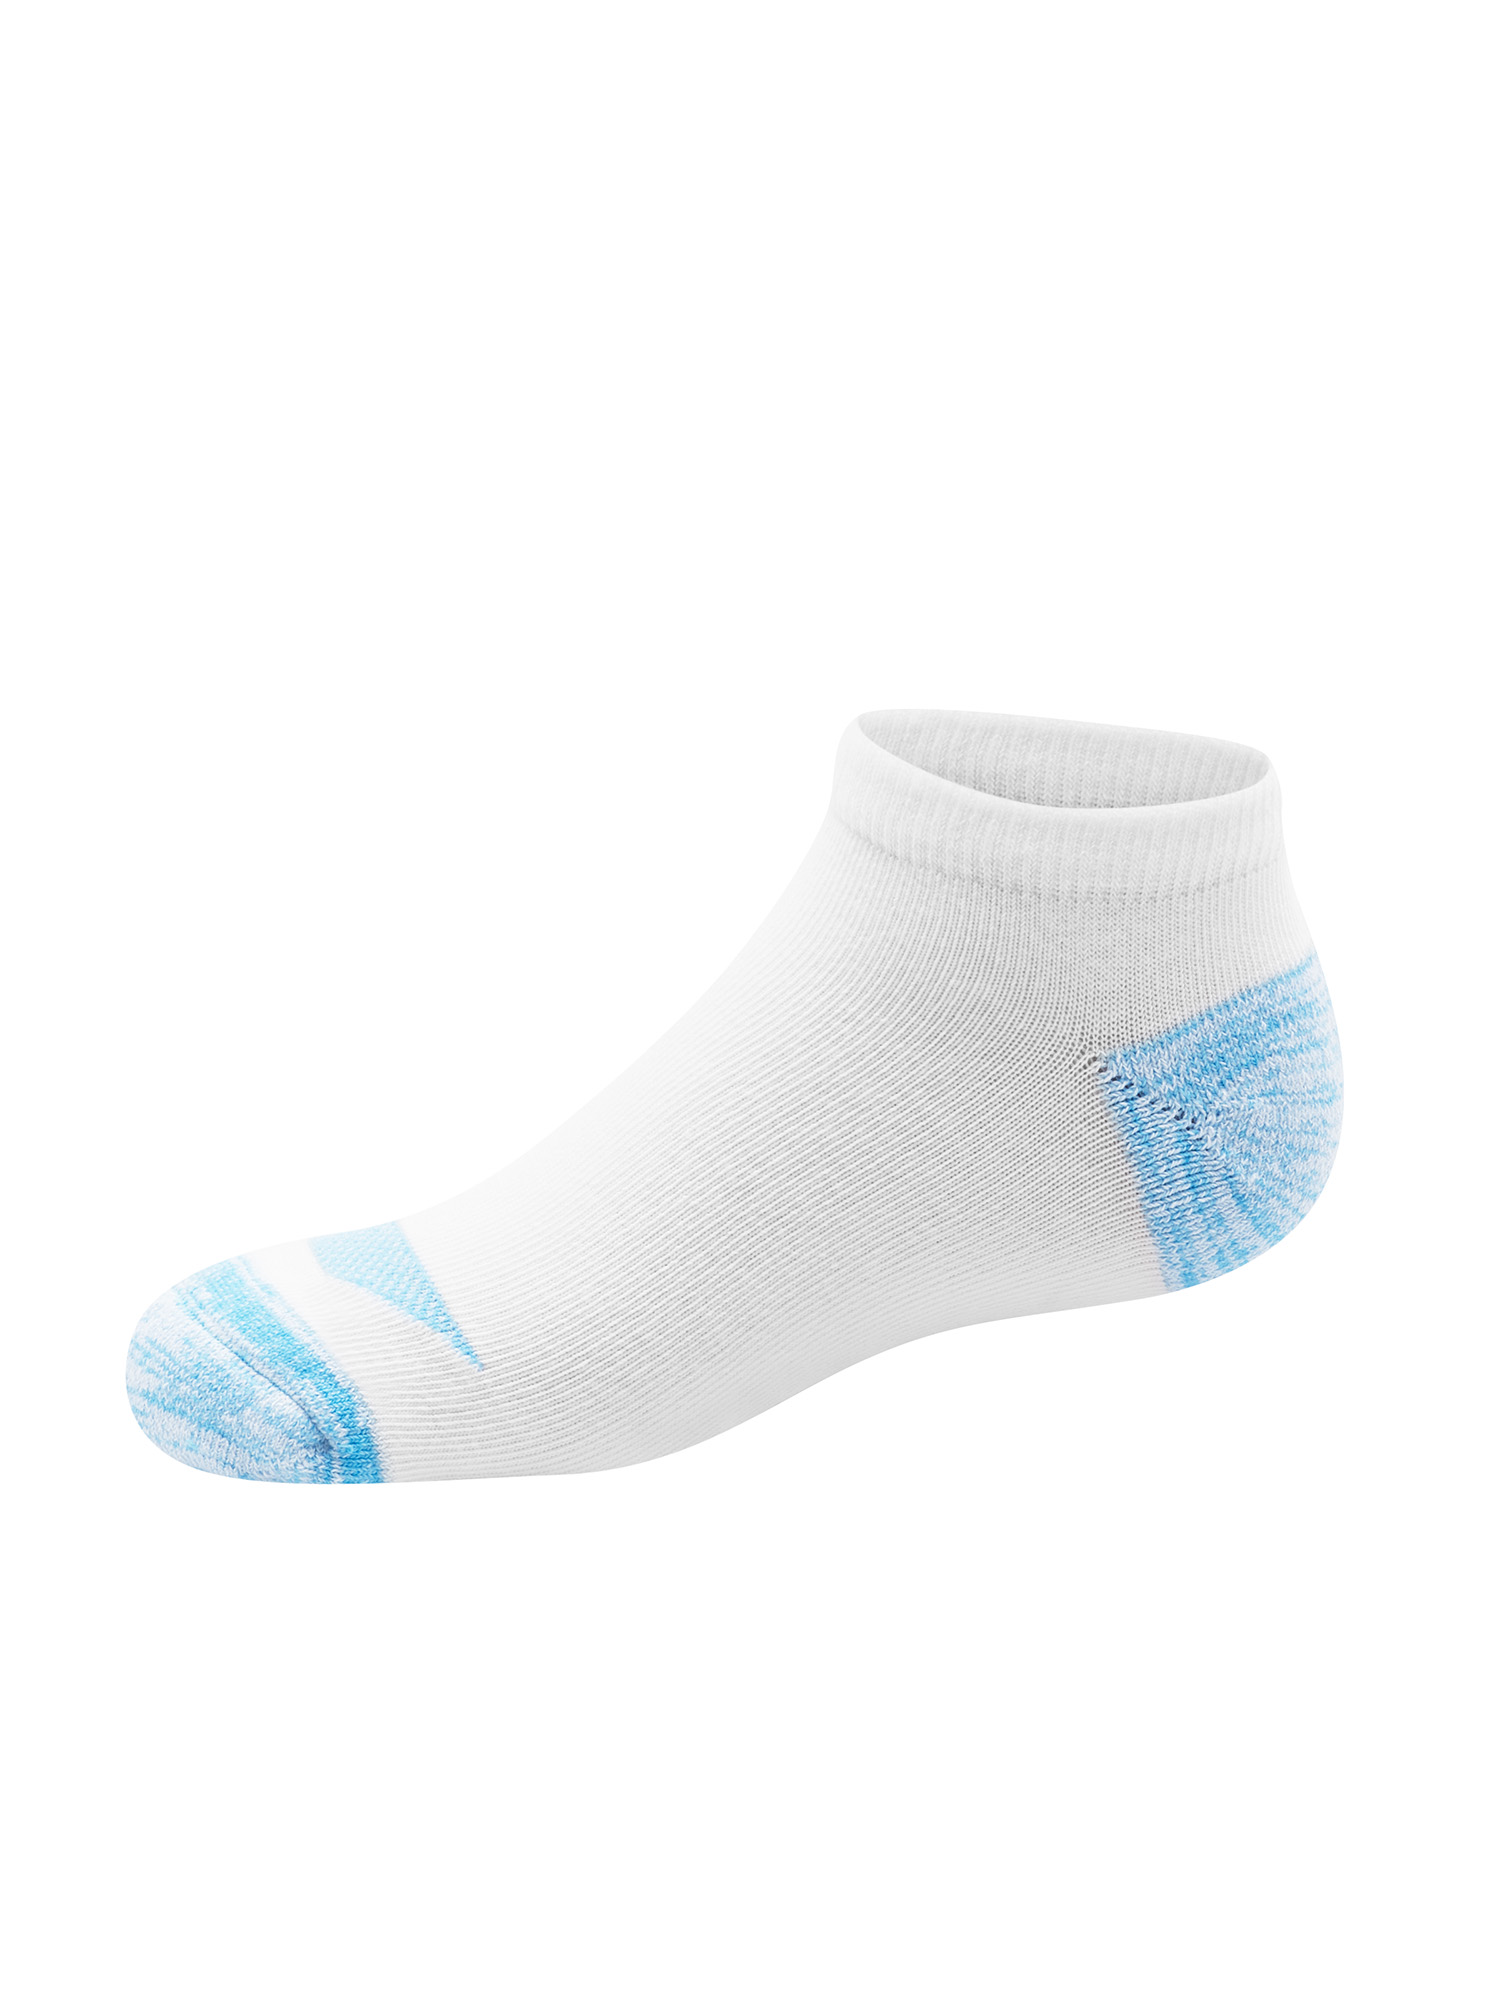 Hanes Girls' Socks, 12 Pack Cool Comfort No Show Socks, Size S-L ...